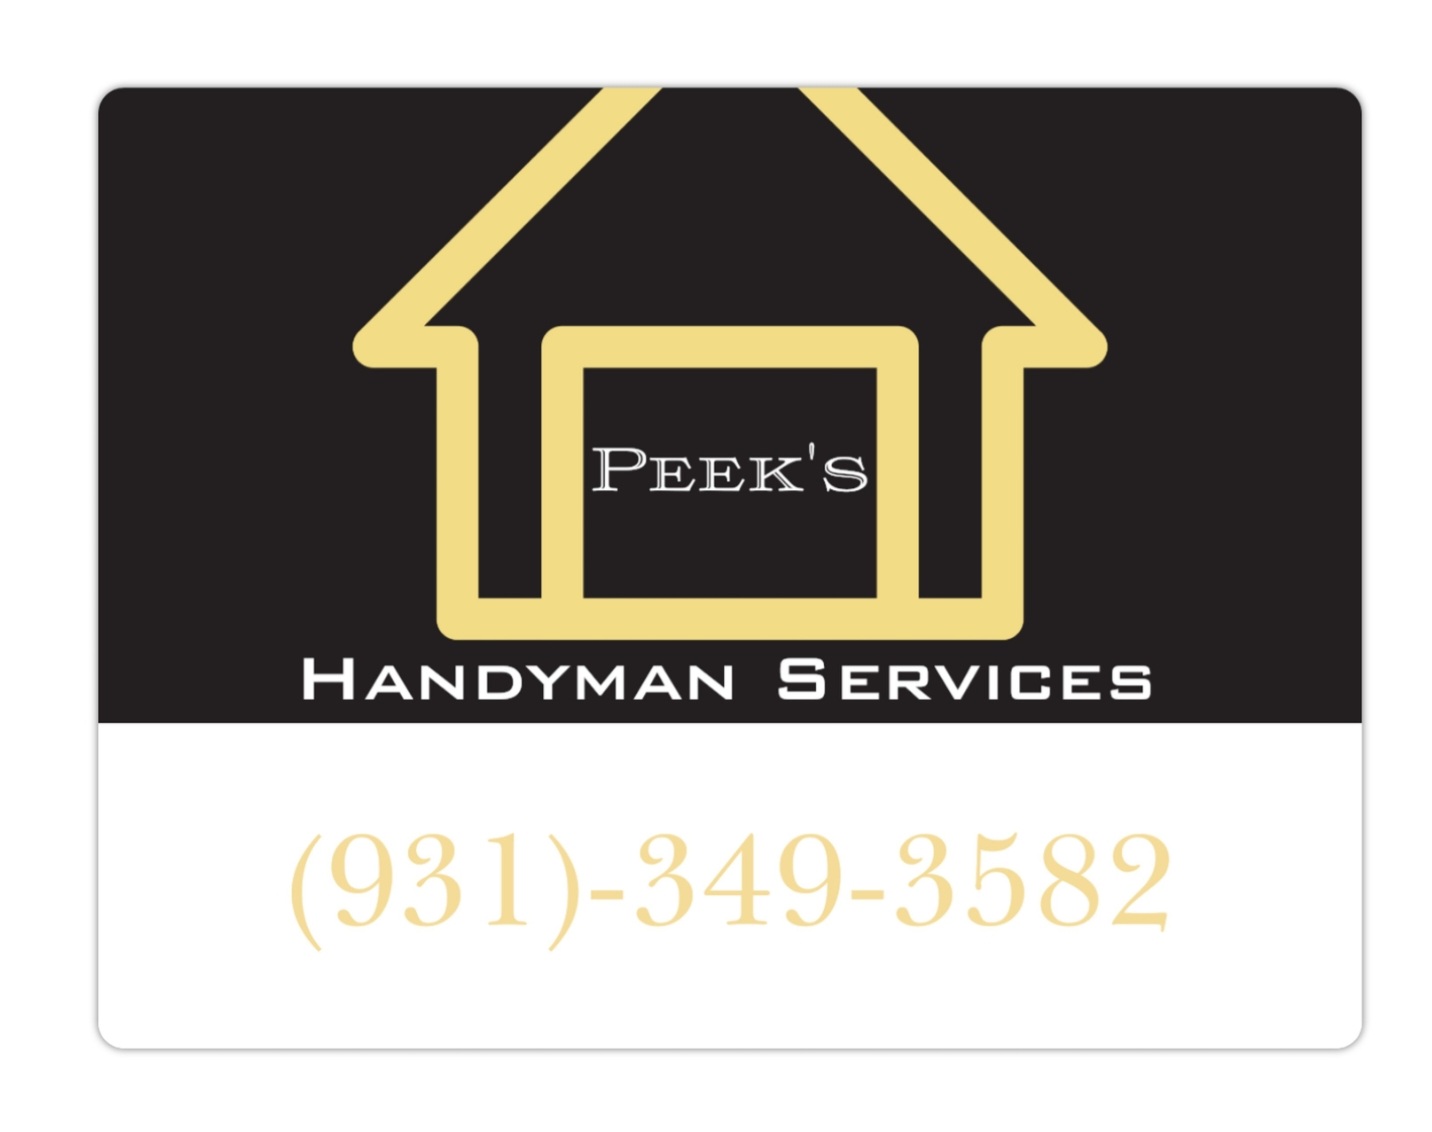 Peek's Handyman Services Logo